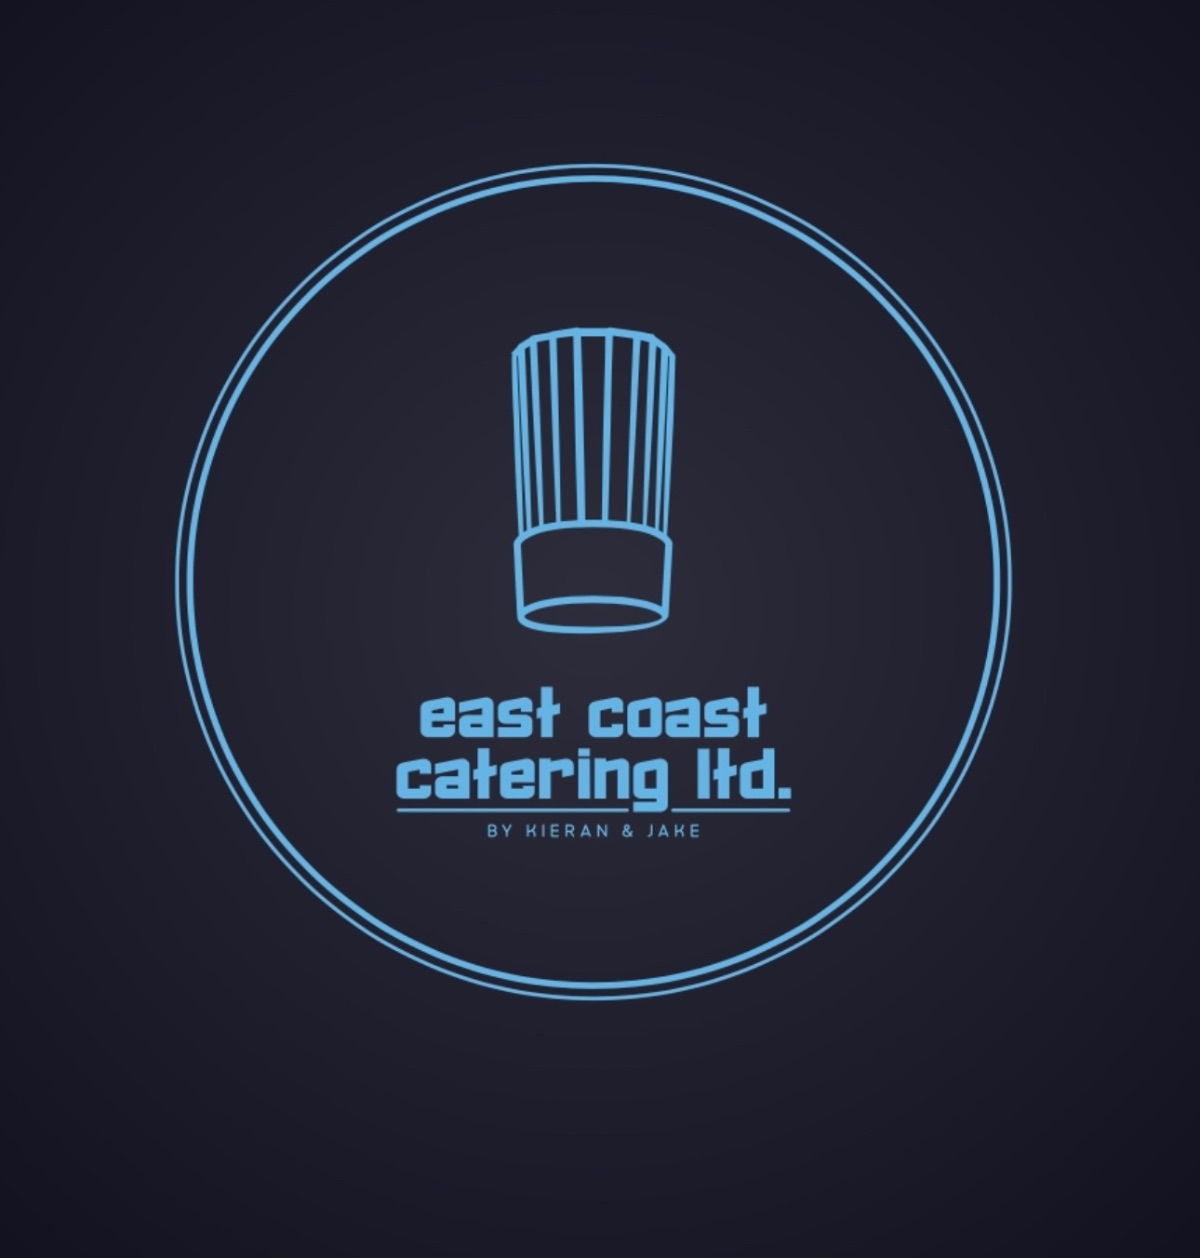 East Coast Catering Ltd-Image-44